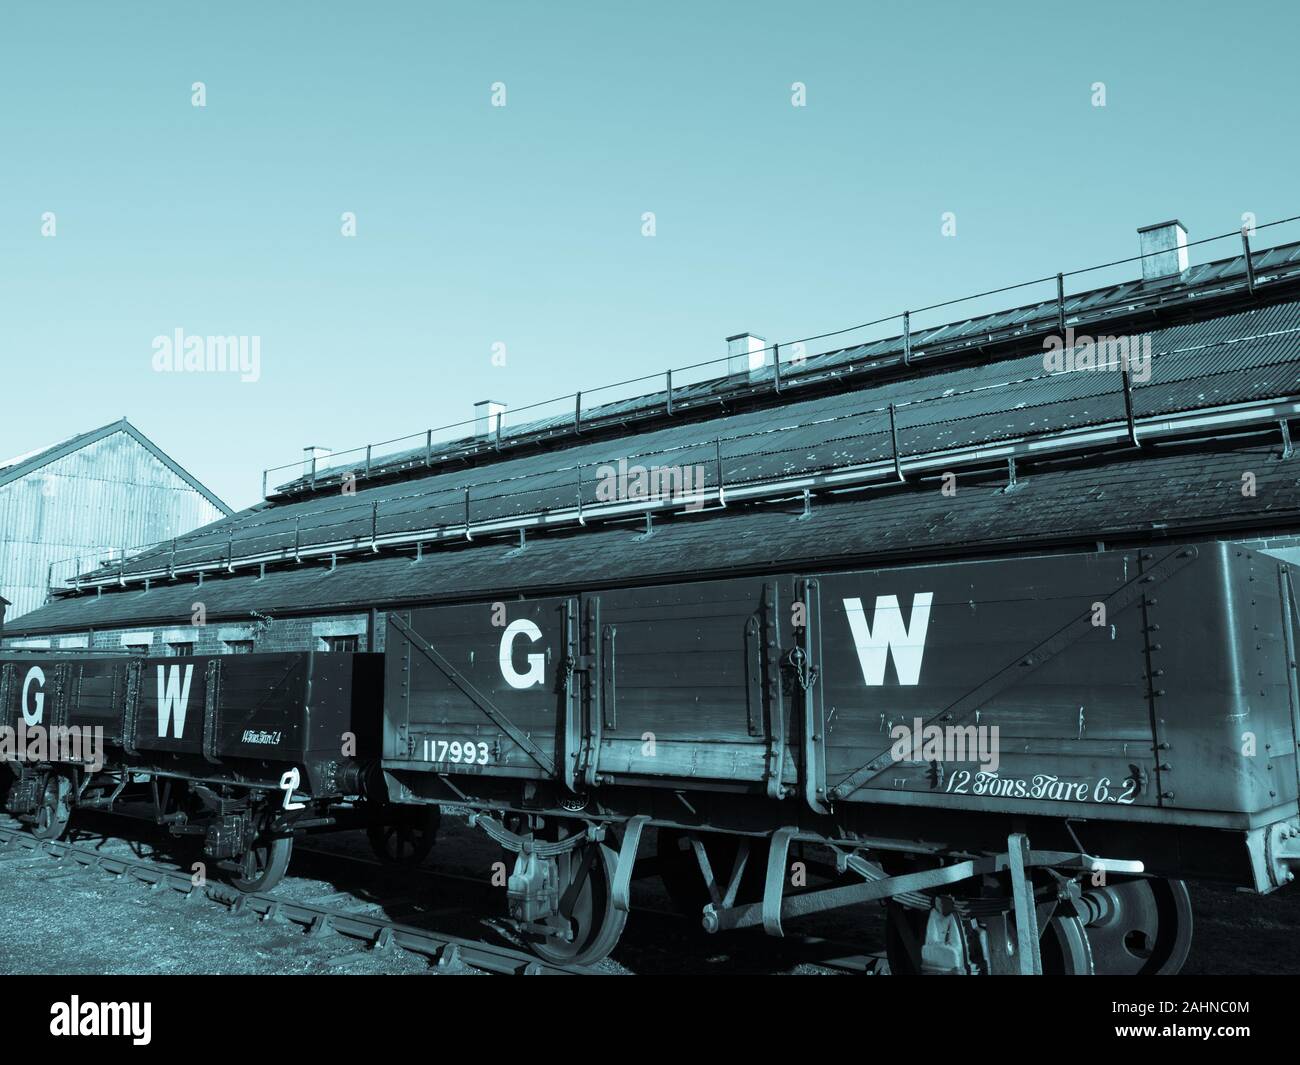 G W Open C wagon, Rail Rollingstock, Didcot Railway Centre, Oxfordshire, England, UK, GB. Stock Photo